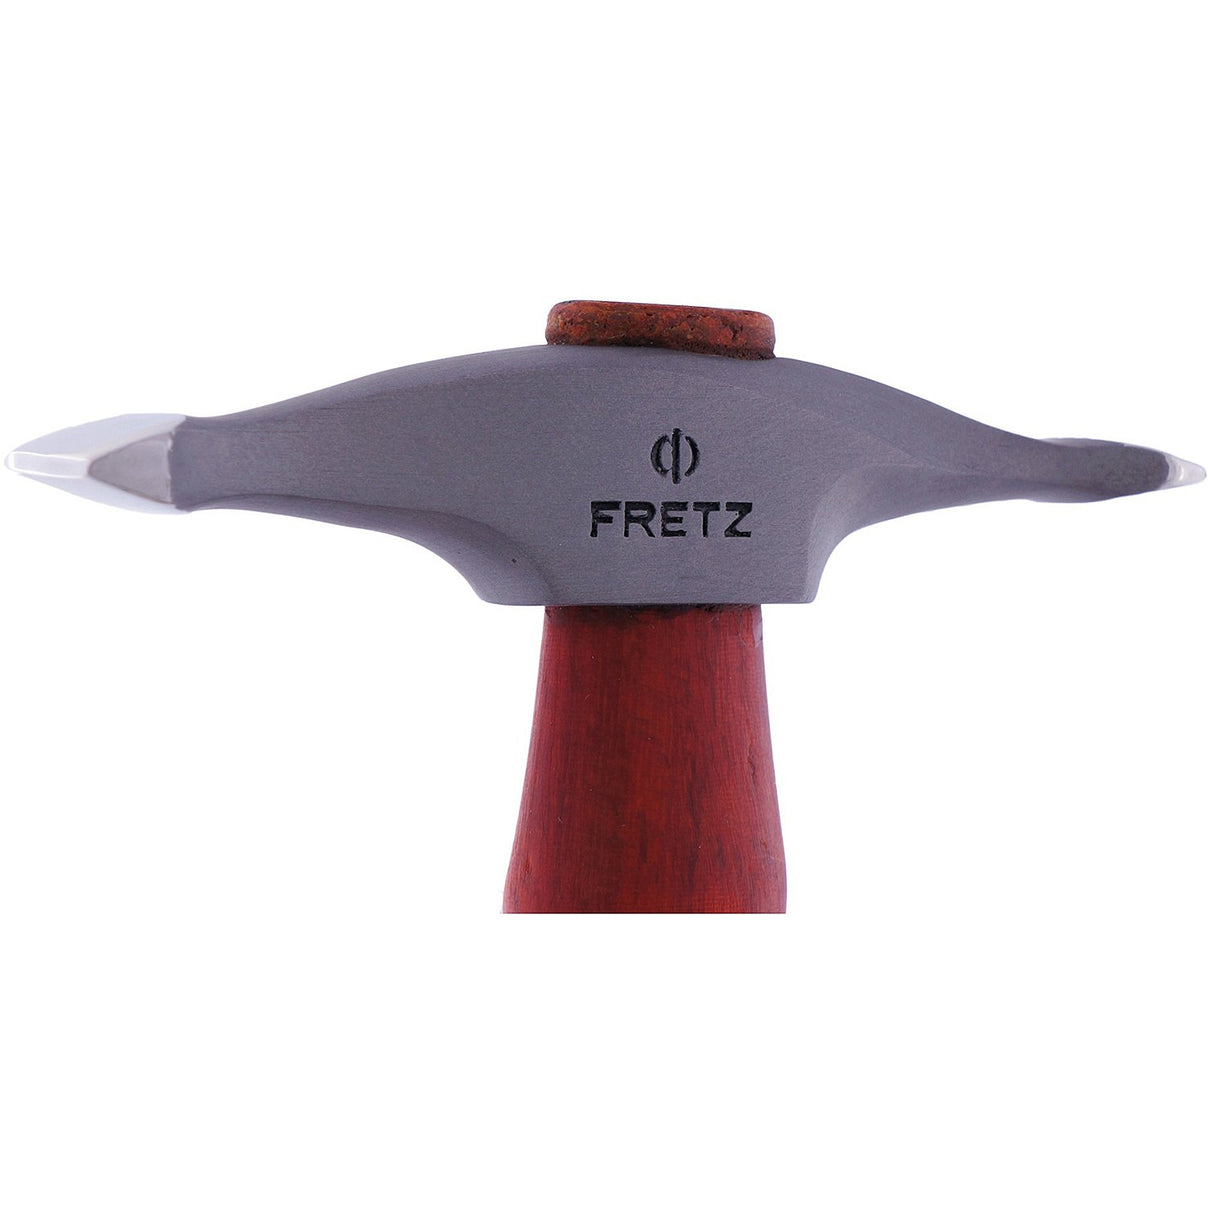 Precisionsmith Sharp Texturing Hammer HMR-412 - Fretz